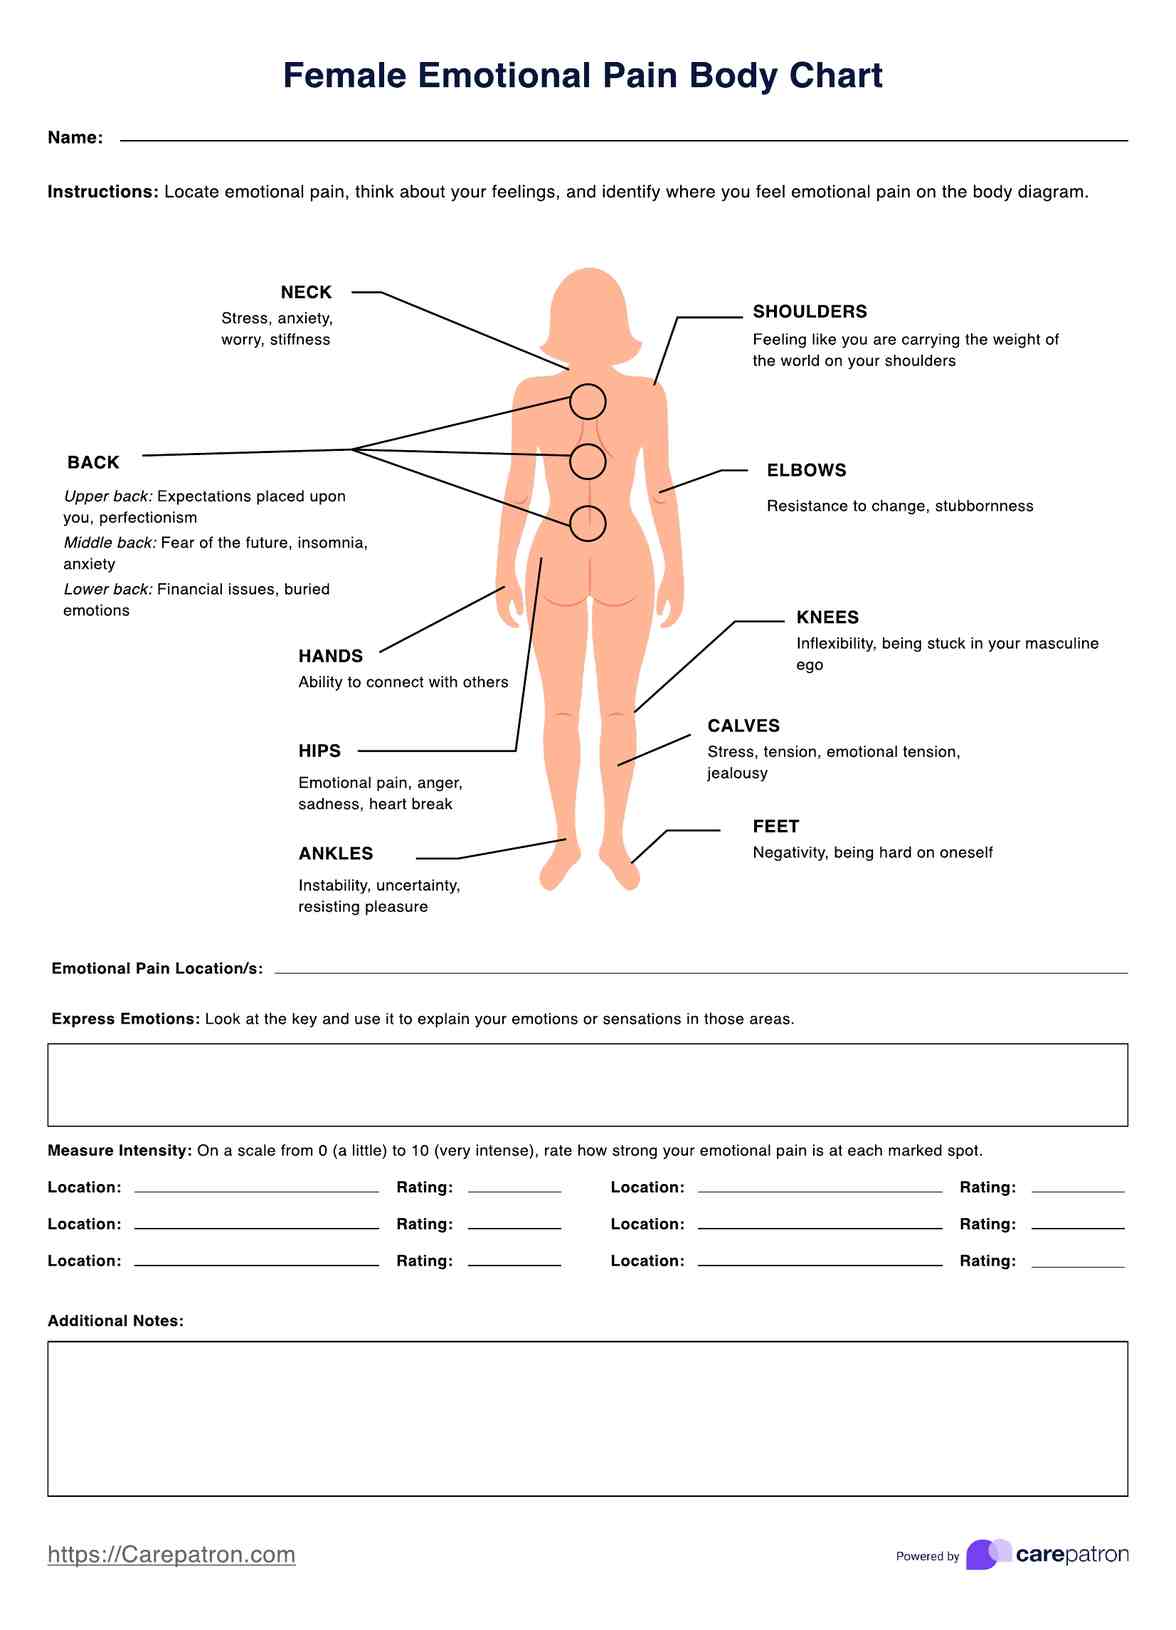 Female Emotional Pain Body Charts PDF Example